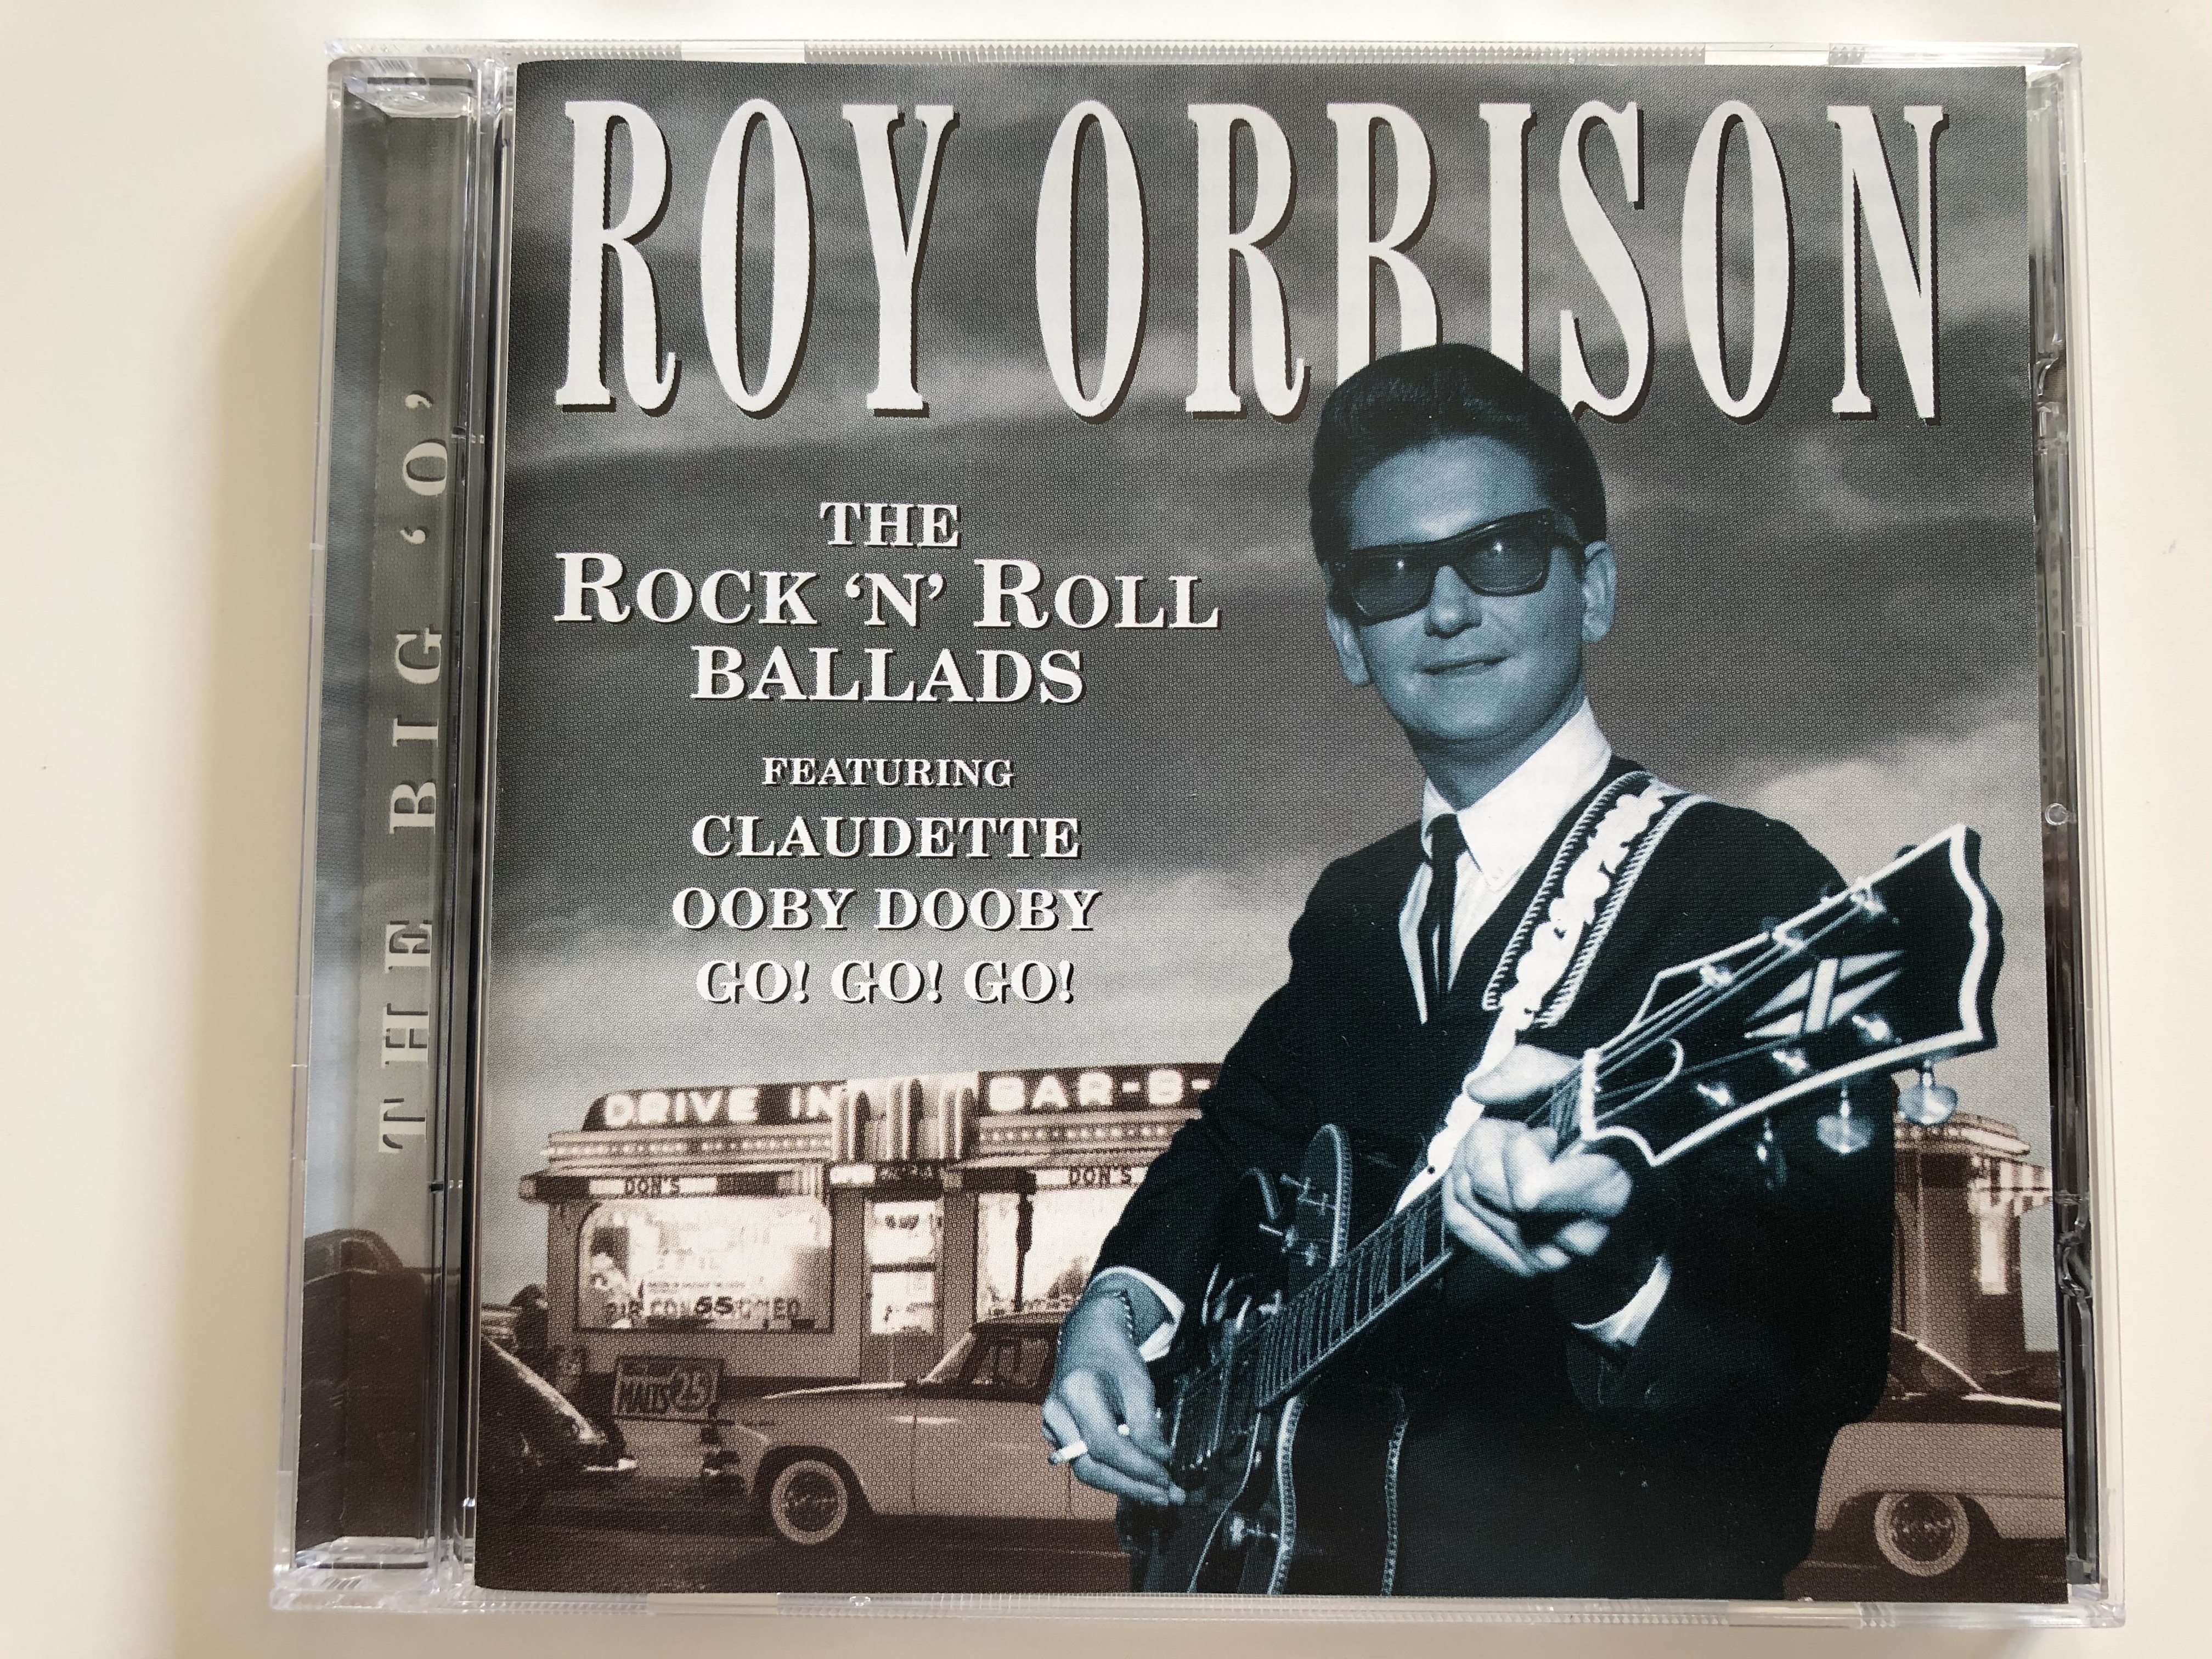 roy-orbison-the-rock-n-roll-ballads-featuring-claudette-ooby-dooby-go-go-go-prism-leisure-audio-cd-1999-platcd-503-1-.jpg